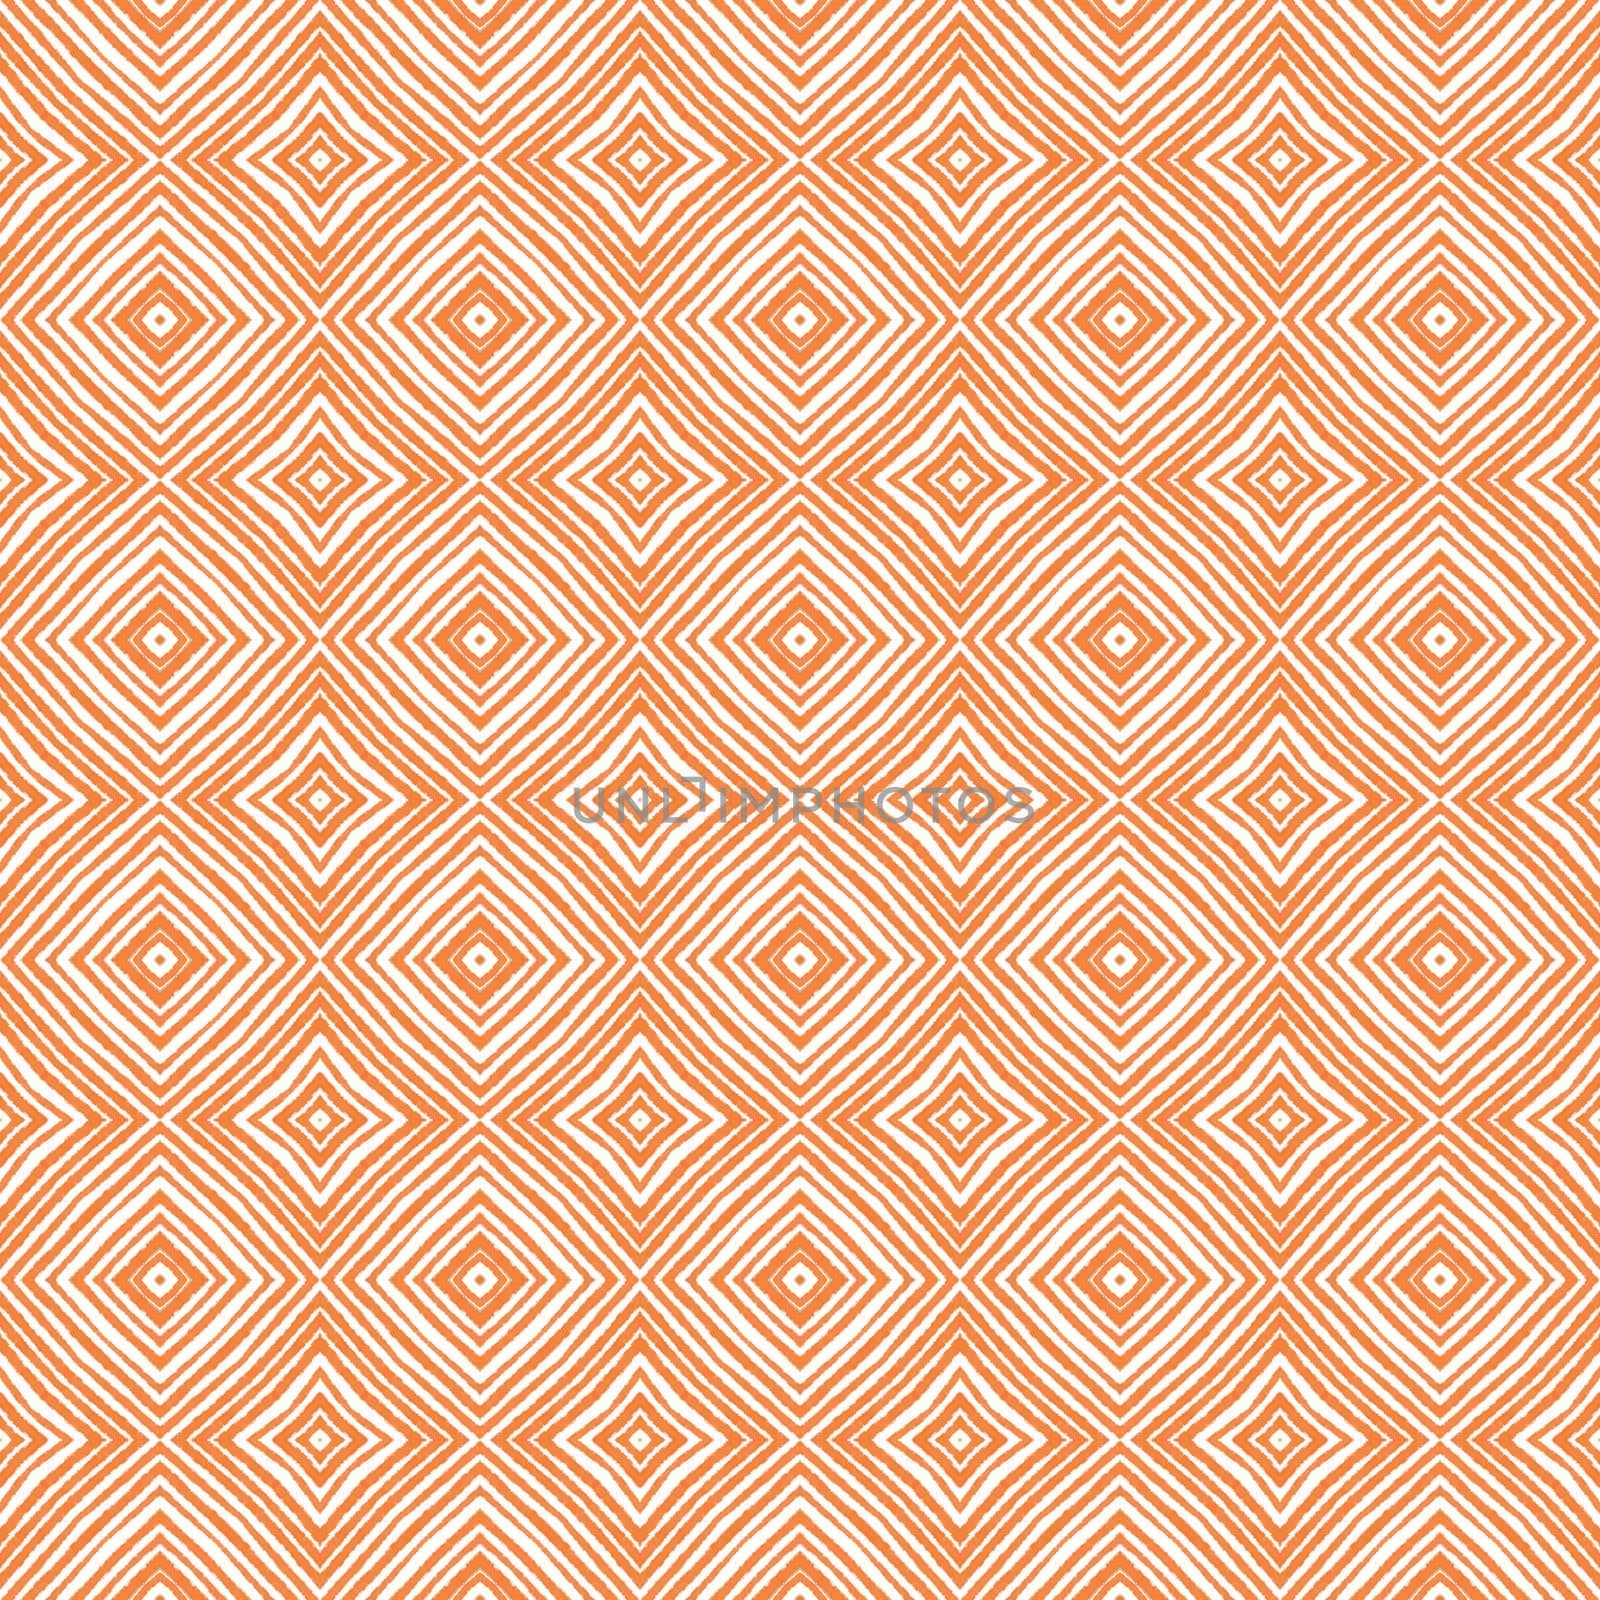 Chevron stripes design. Orange symmetrical by beginagain